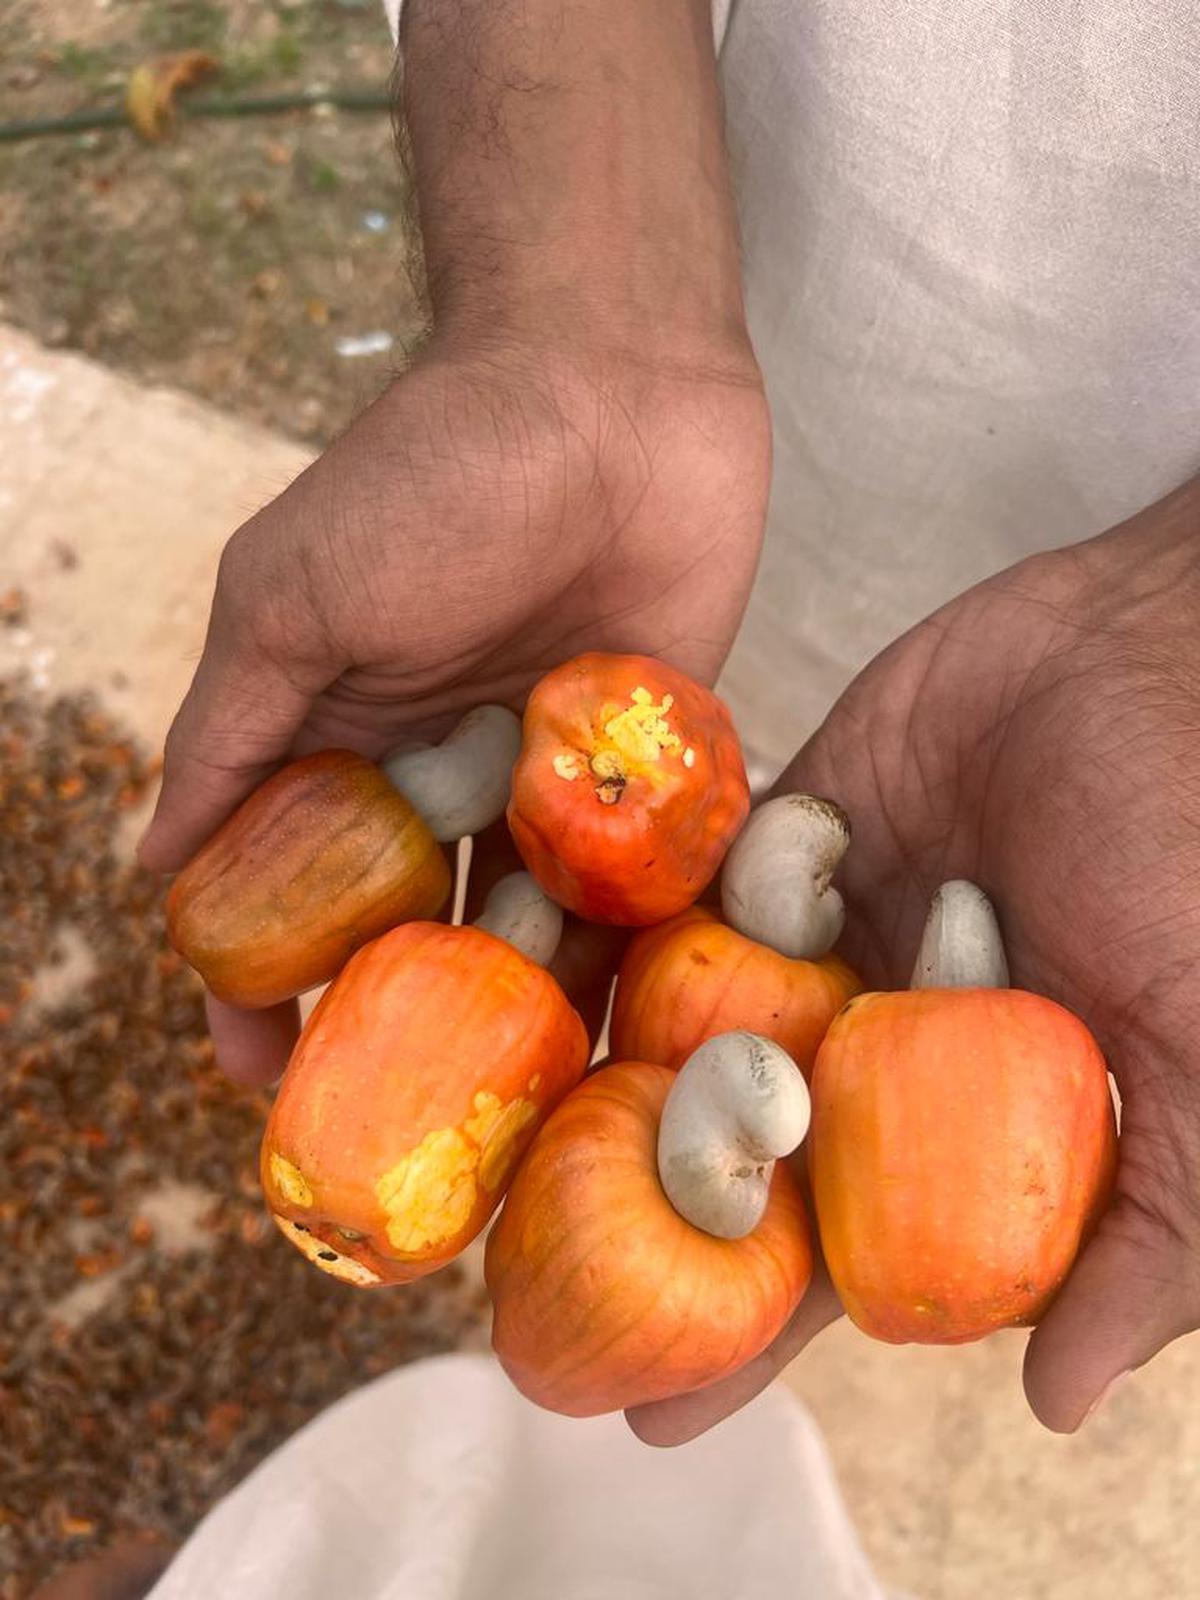 Cashew fruit grown at Alankrutha and Meher’s farm in Warangal, Telangana